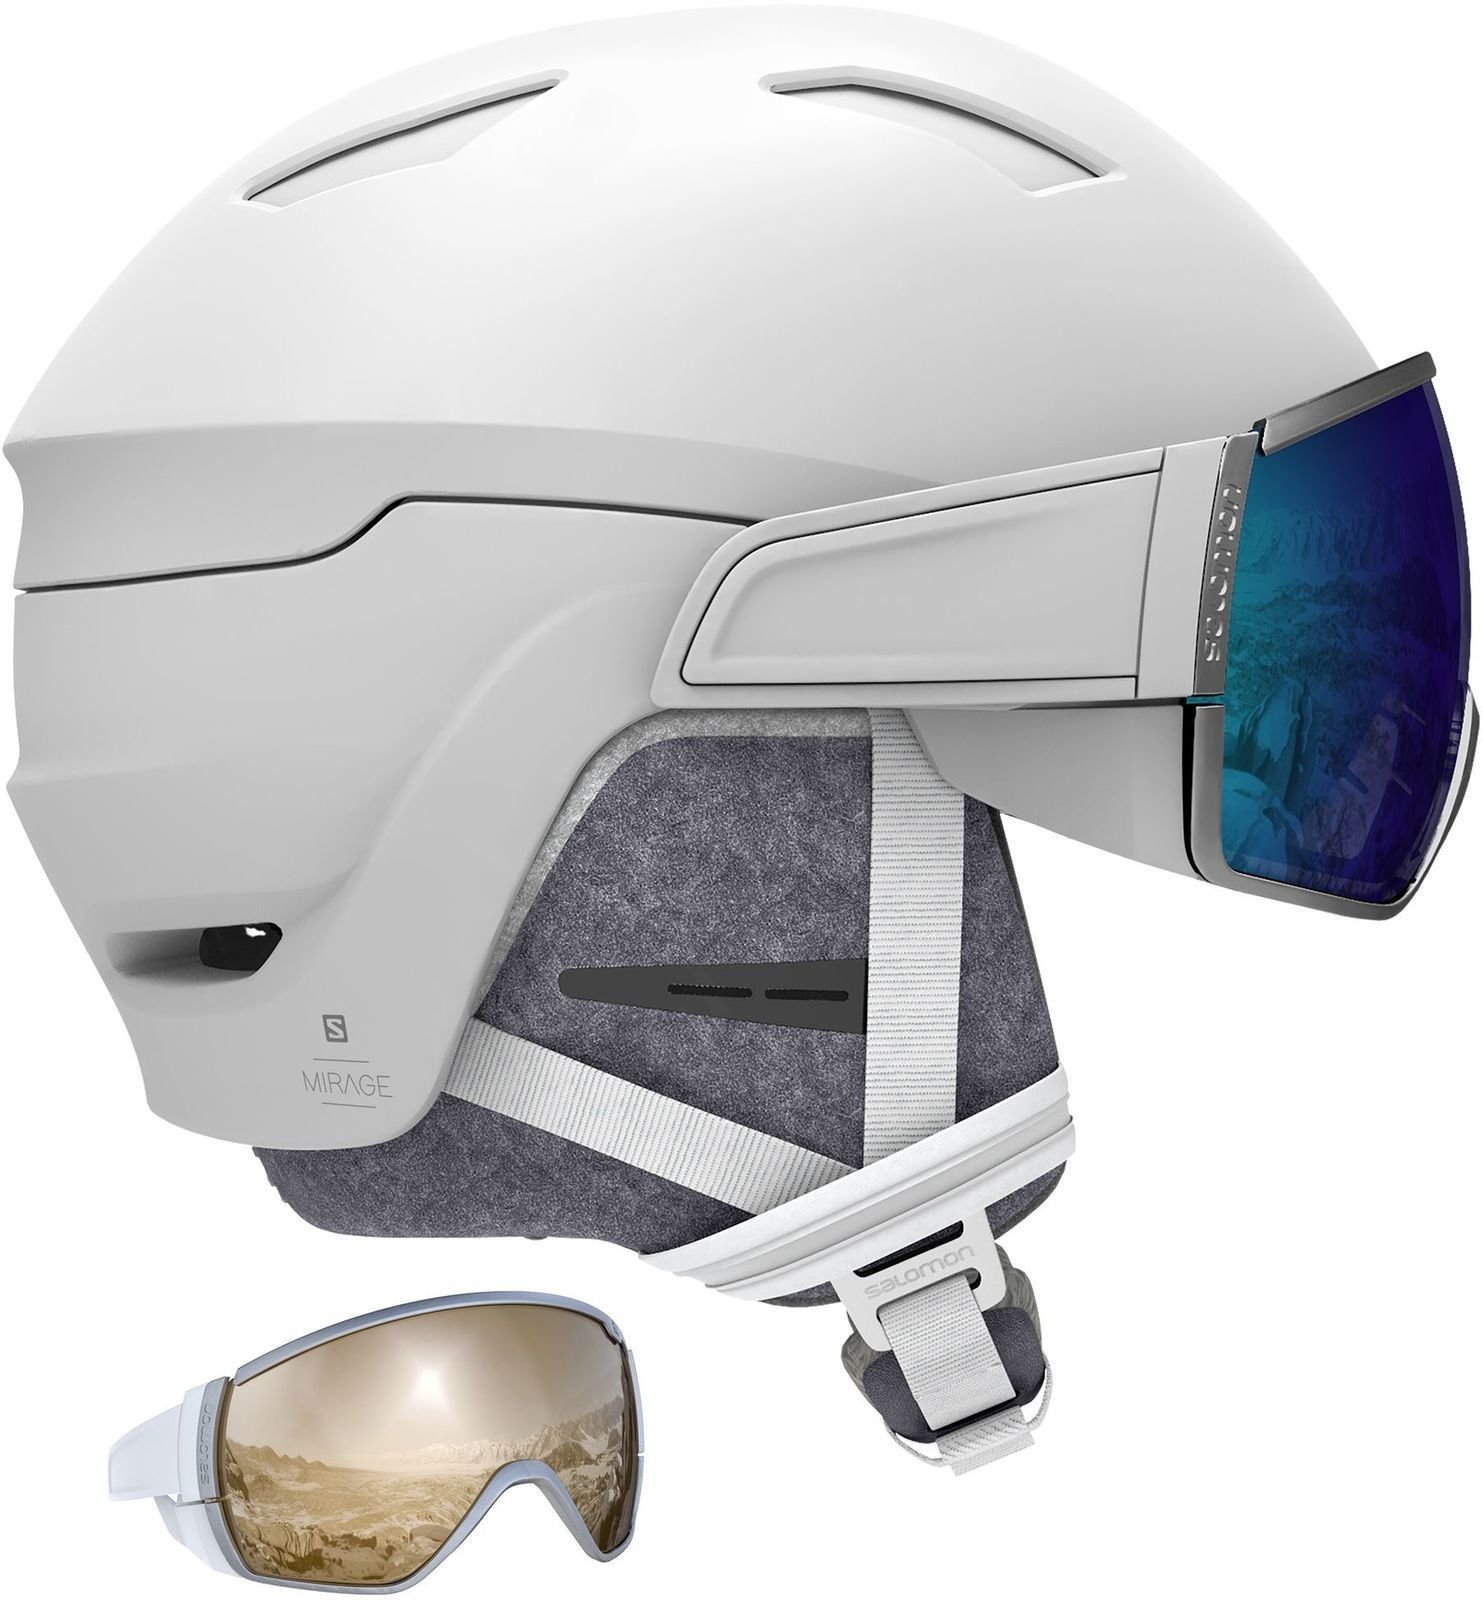 Ski Helmet Salomon Mirage White S (53-56 cm) Ski Helmet